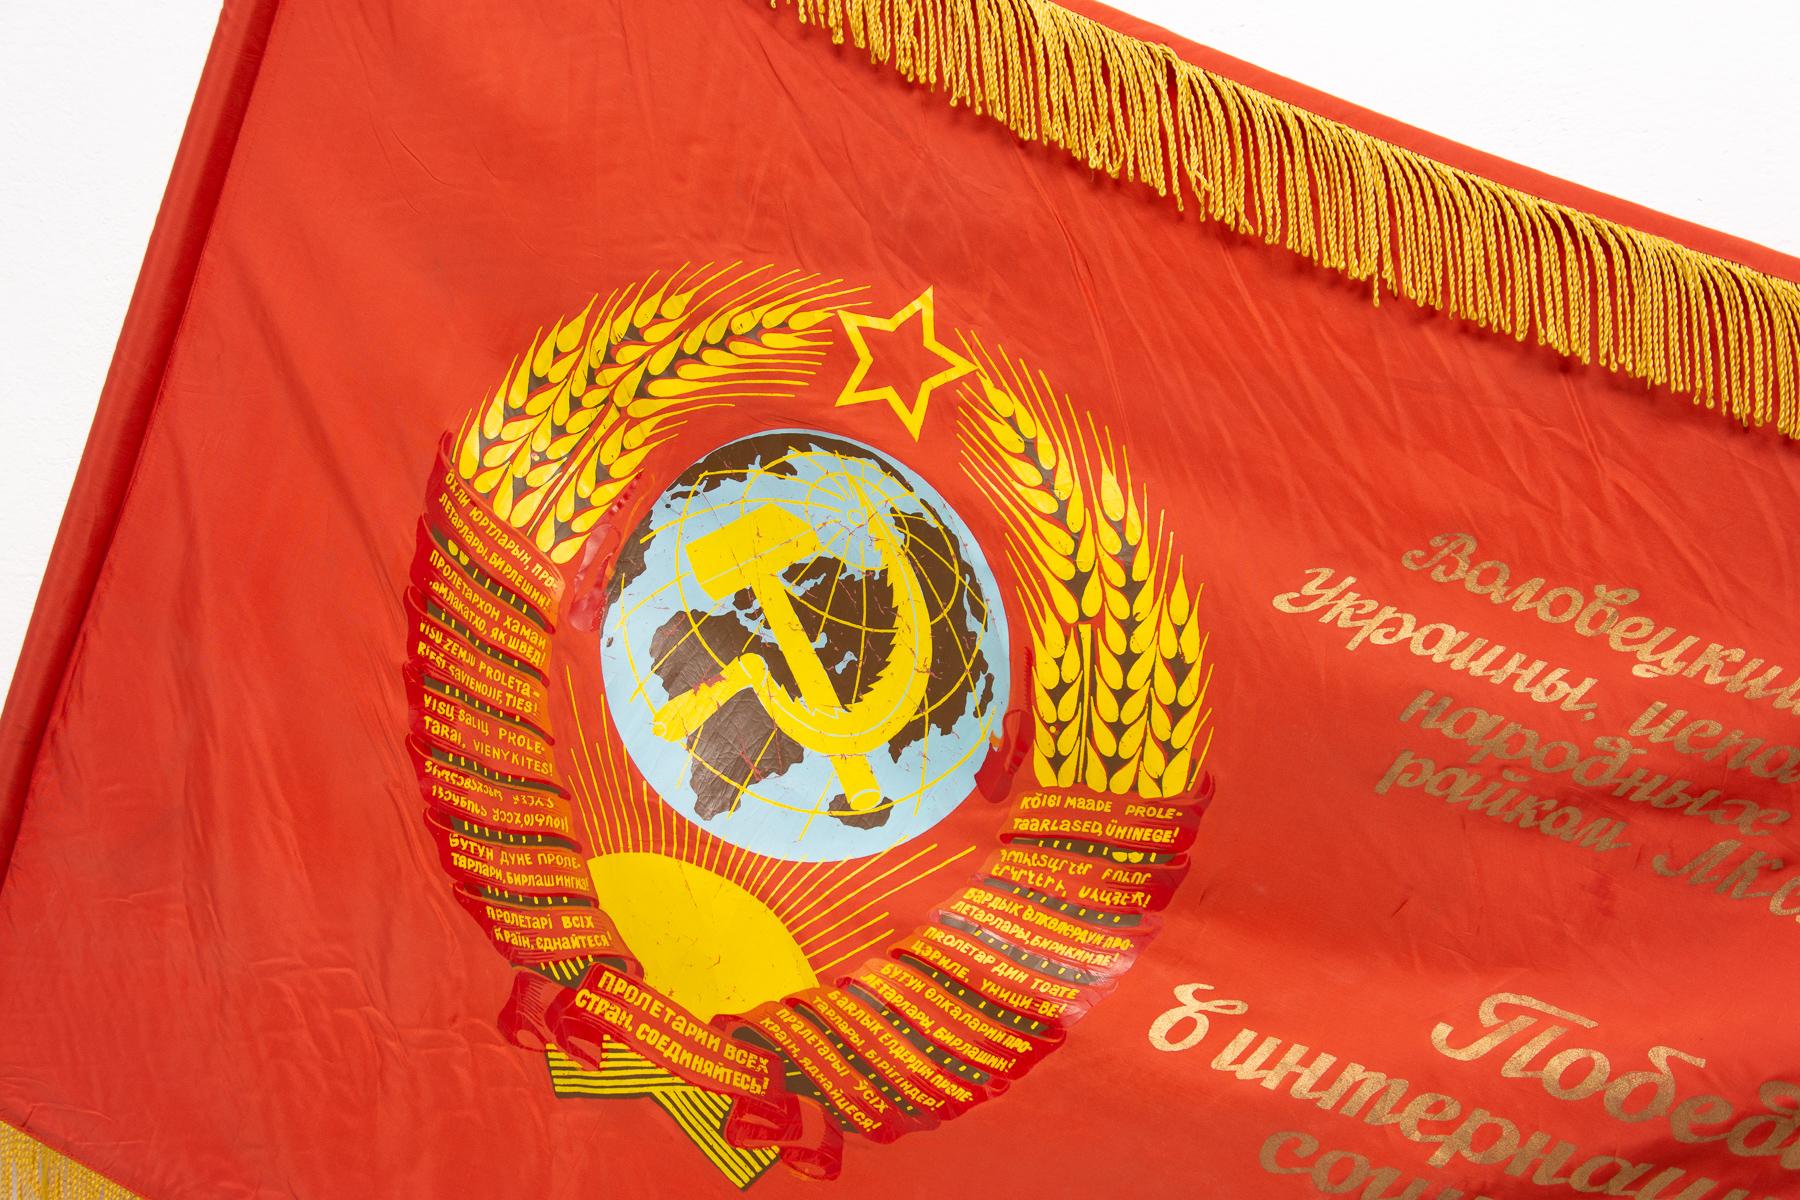 Metal Communist Old Original Flag from 1950s with a Portrait of Vladimir Ilyich Lenin